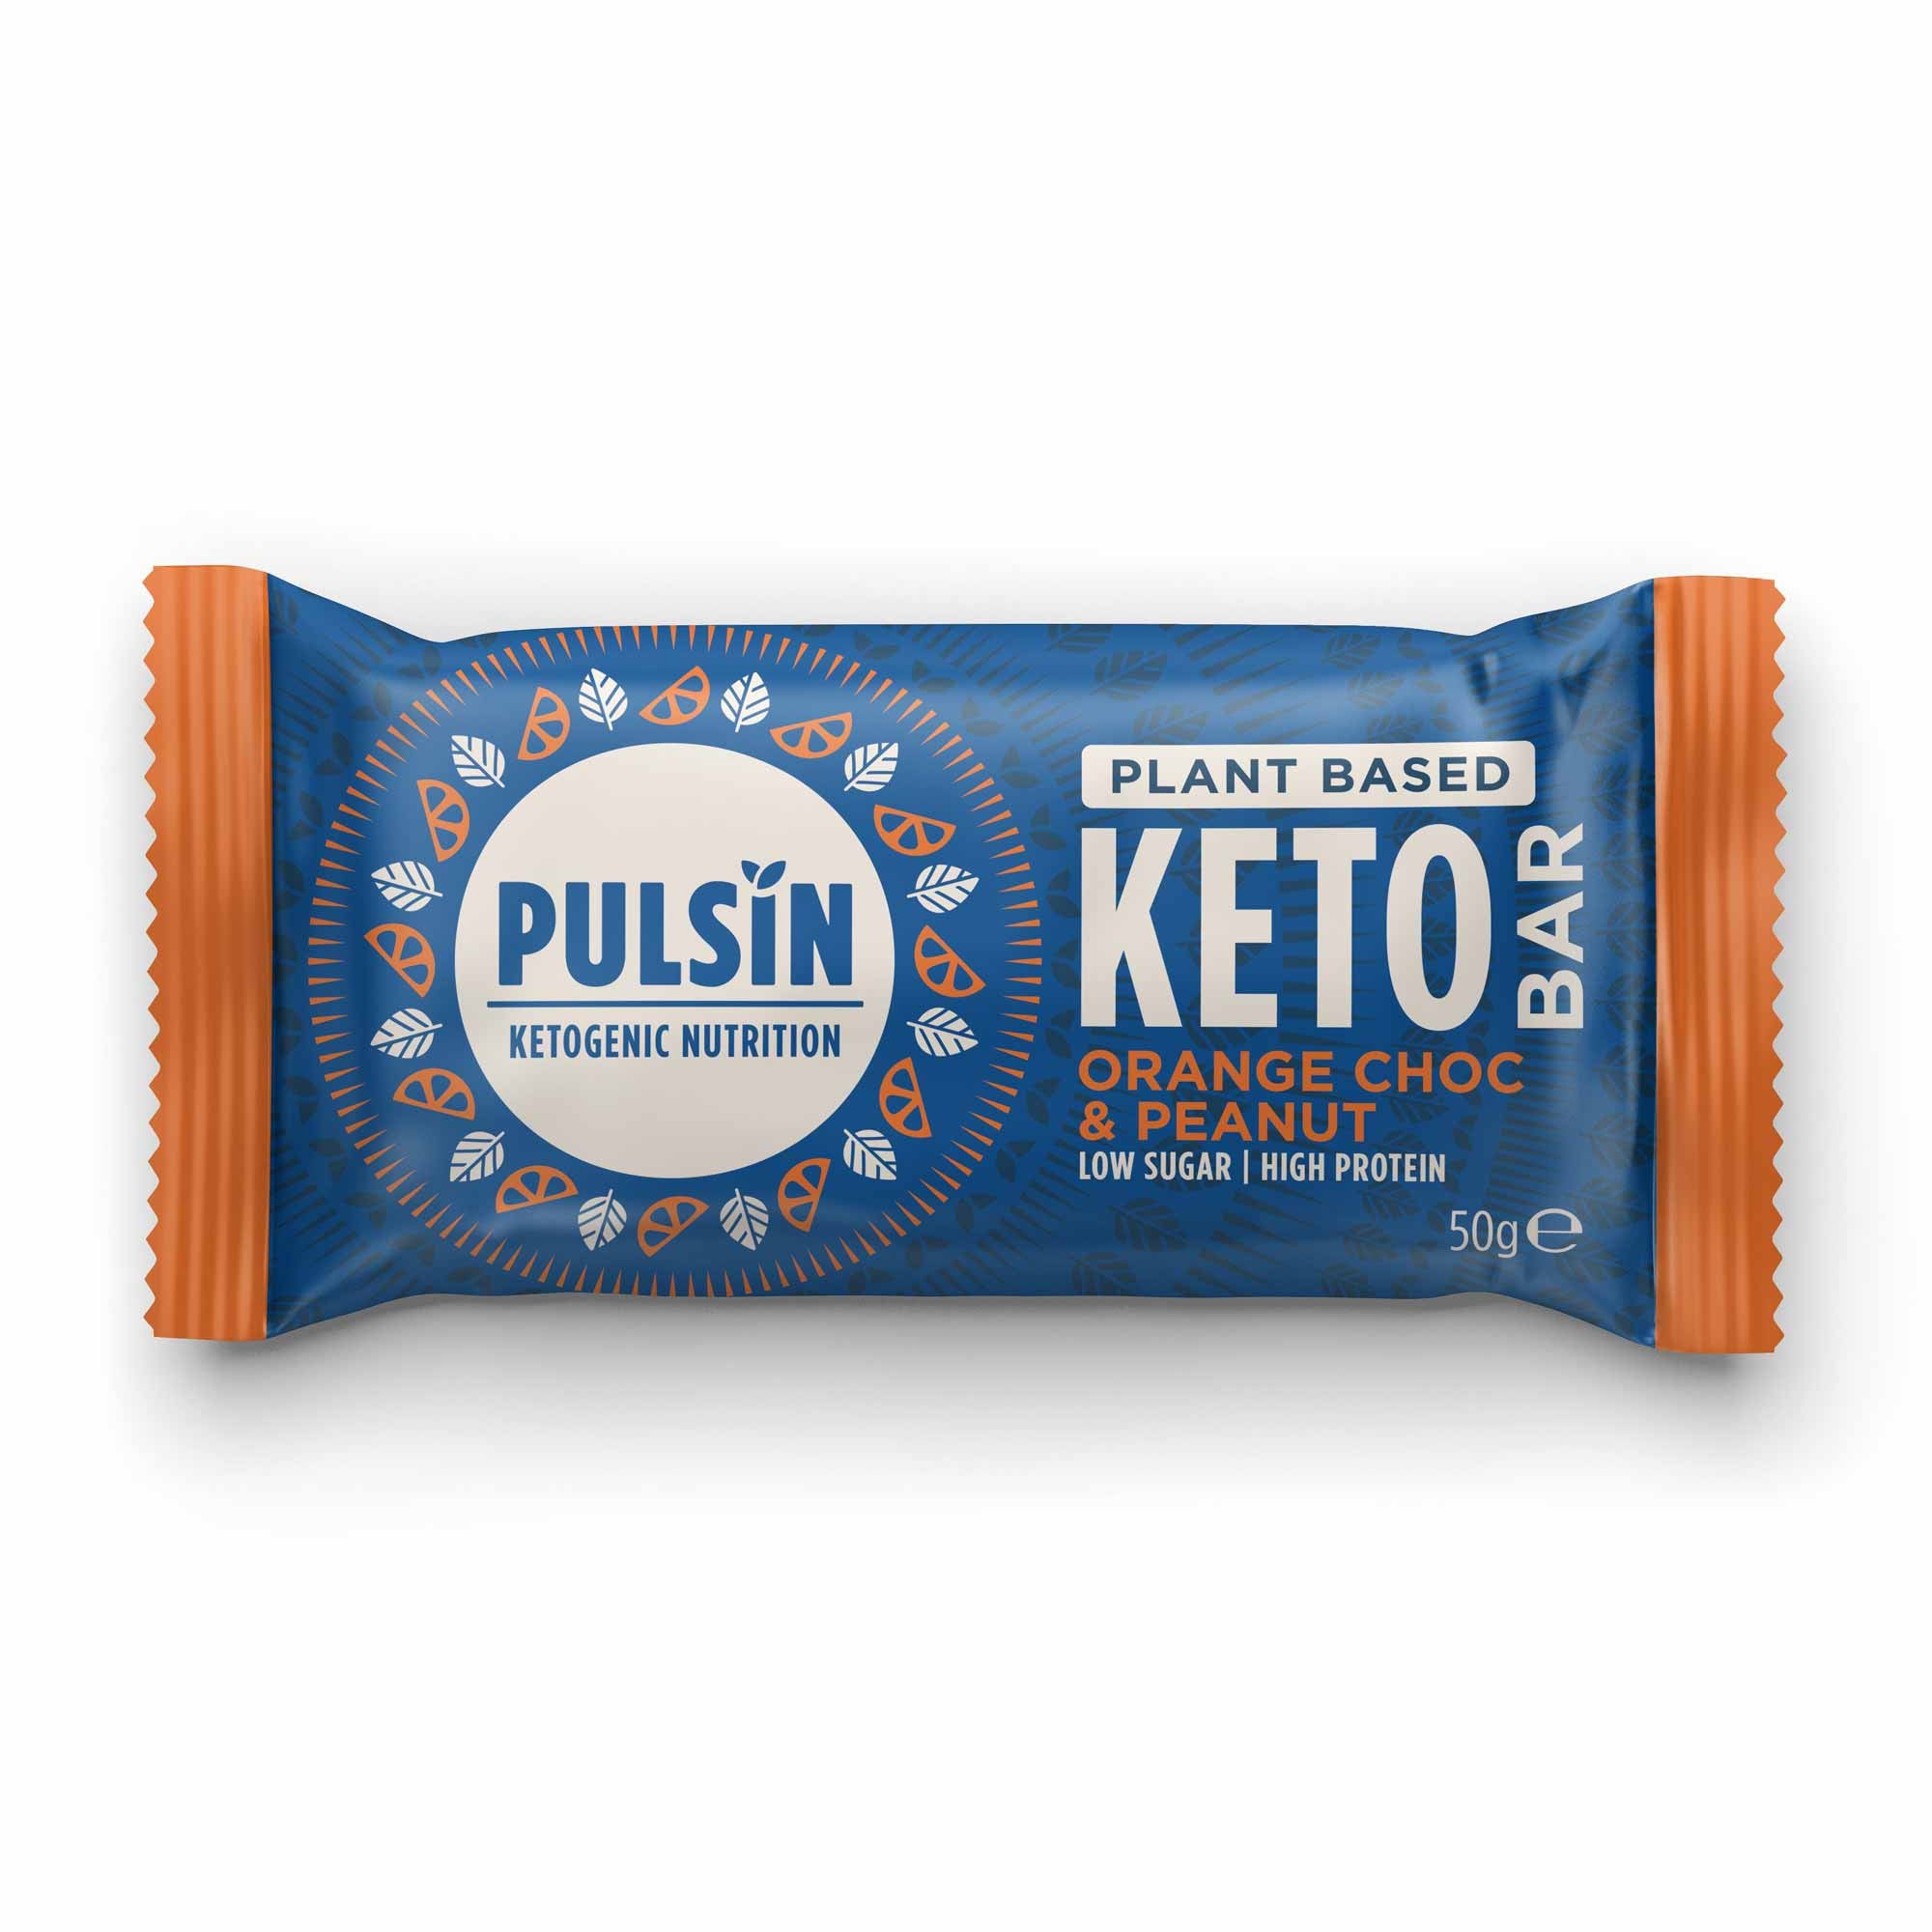 Pulsin Orange Choc and Peanut Keto Bar